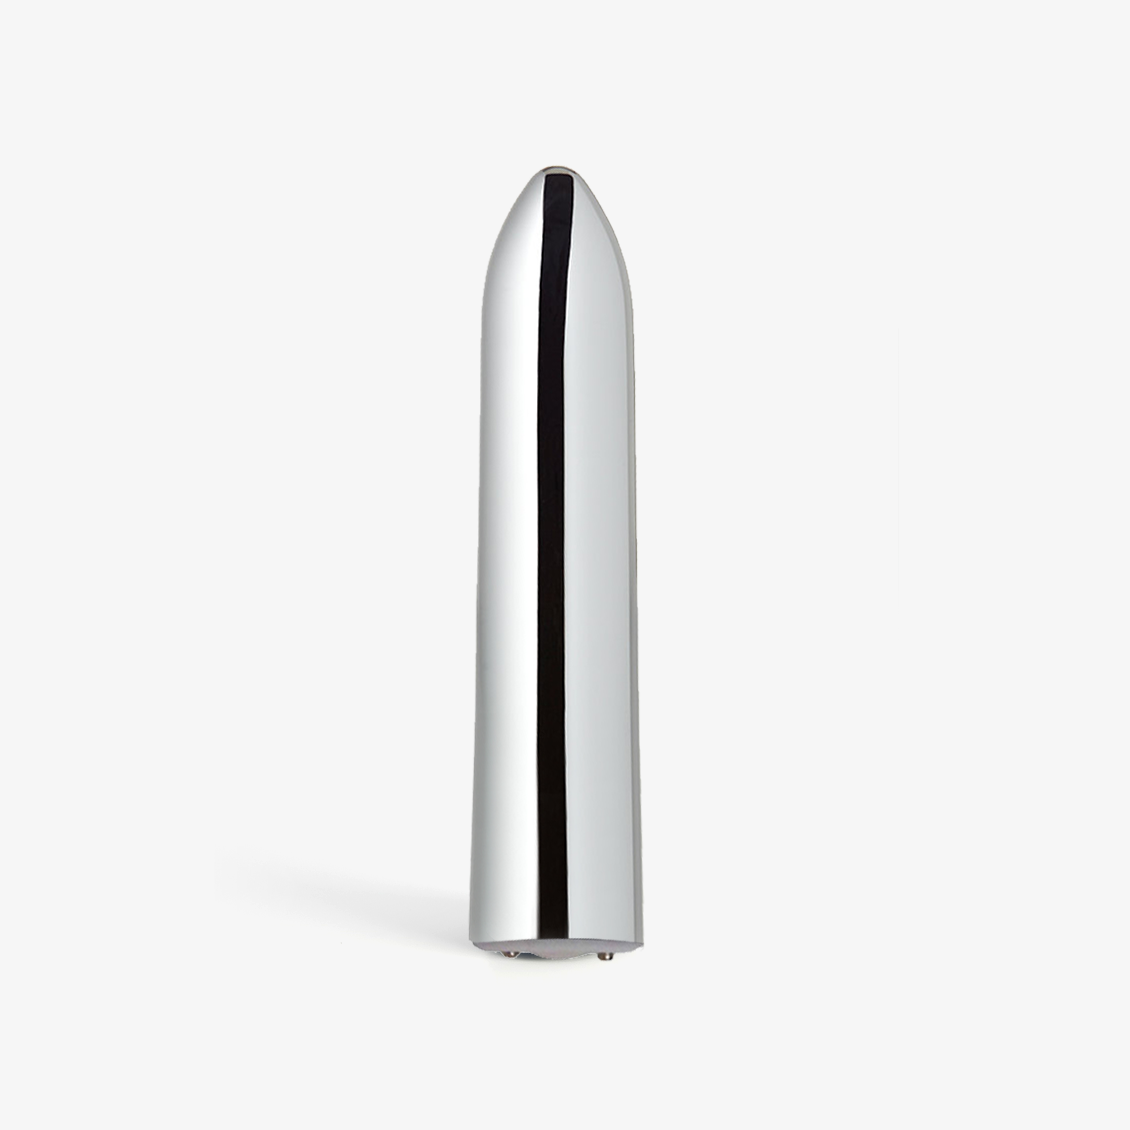 The Nu Sensuelle Point 20 Function Bullet